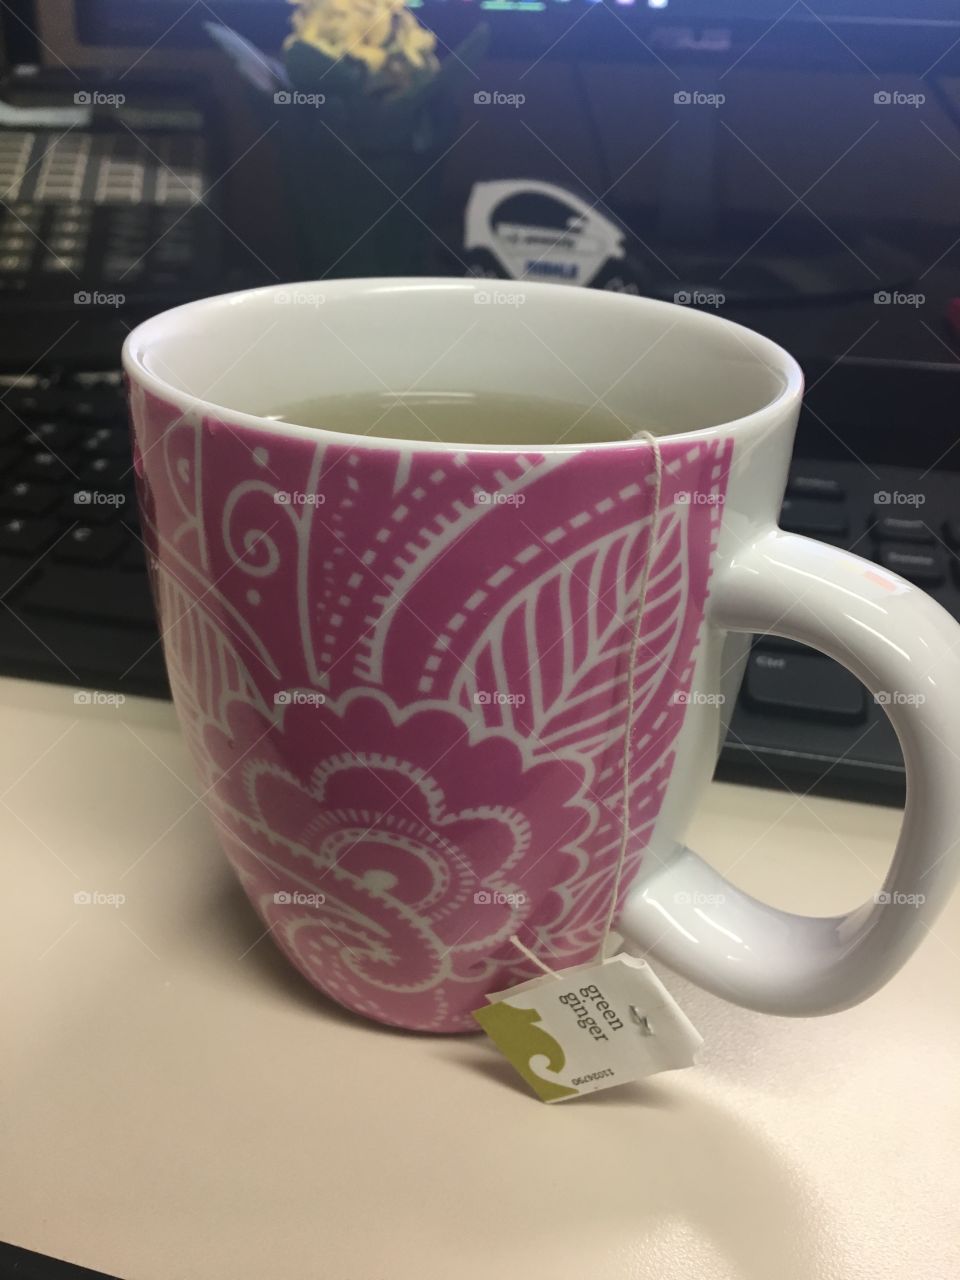 Tea at work! 